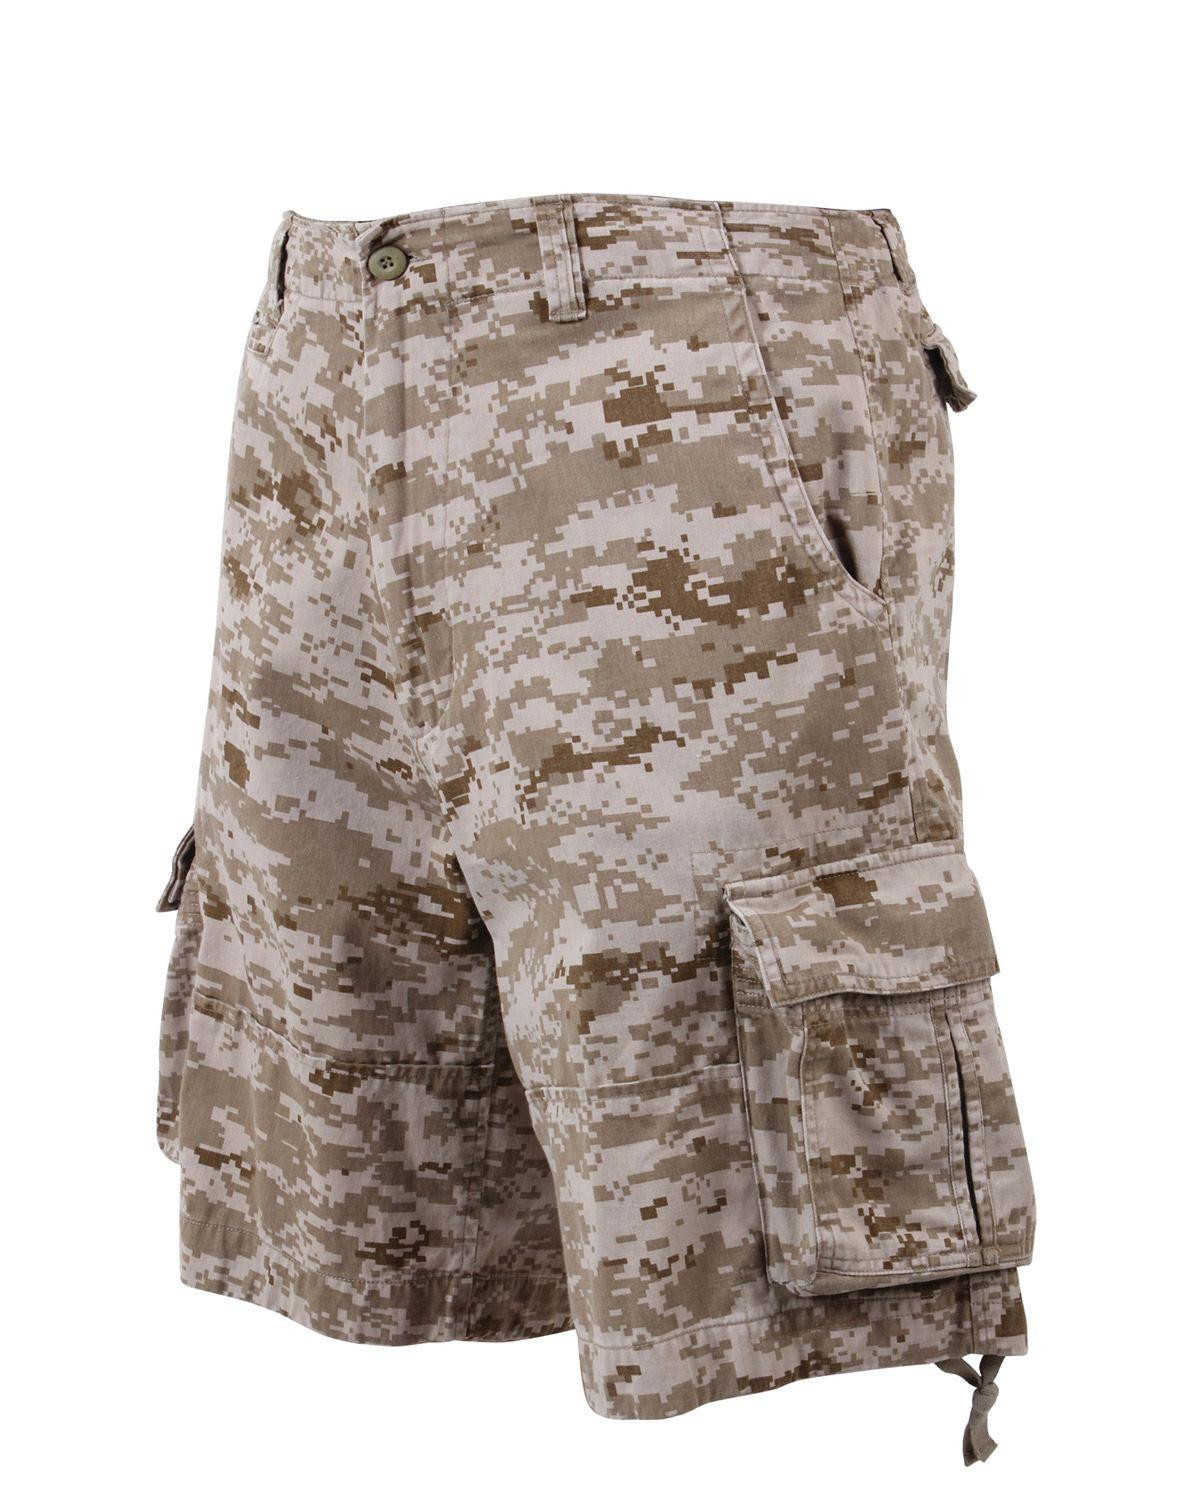 Rothco Vintage Infantry Shorts (Desert Digital Camo, M)